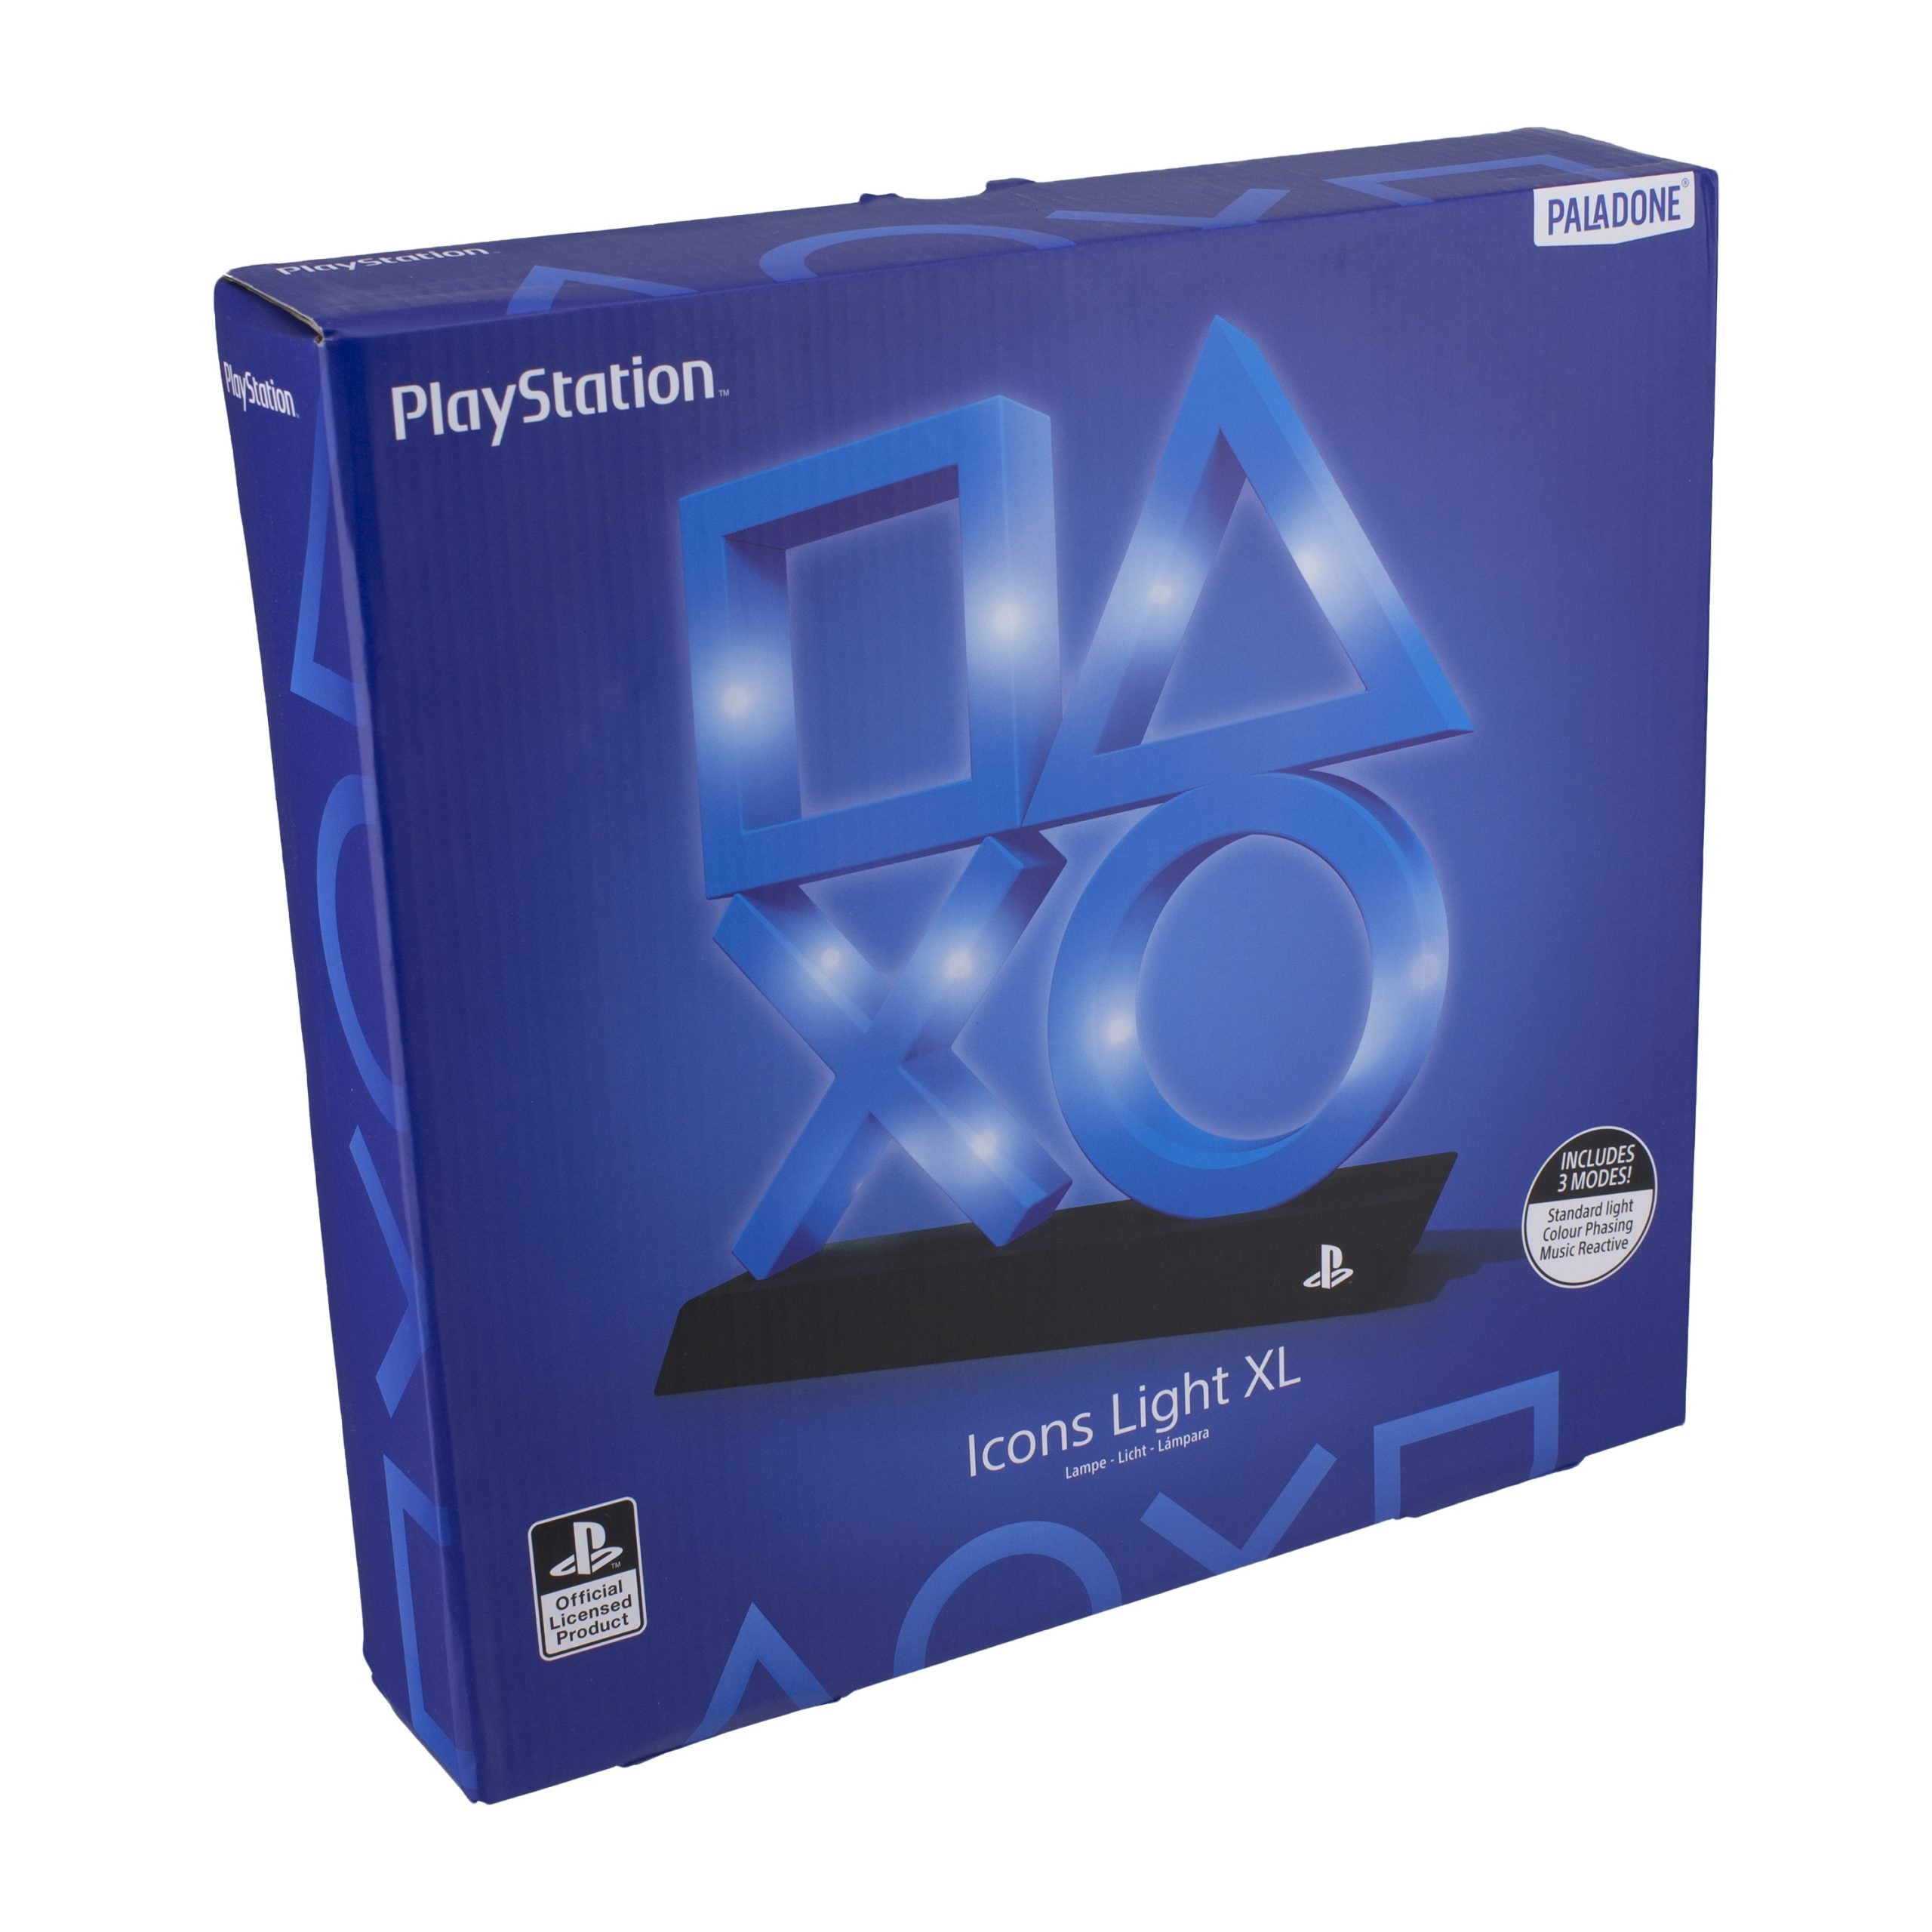 Paladone - PlayStation PS5 XL Icons Light